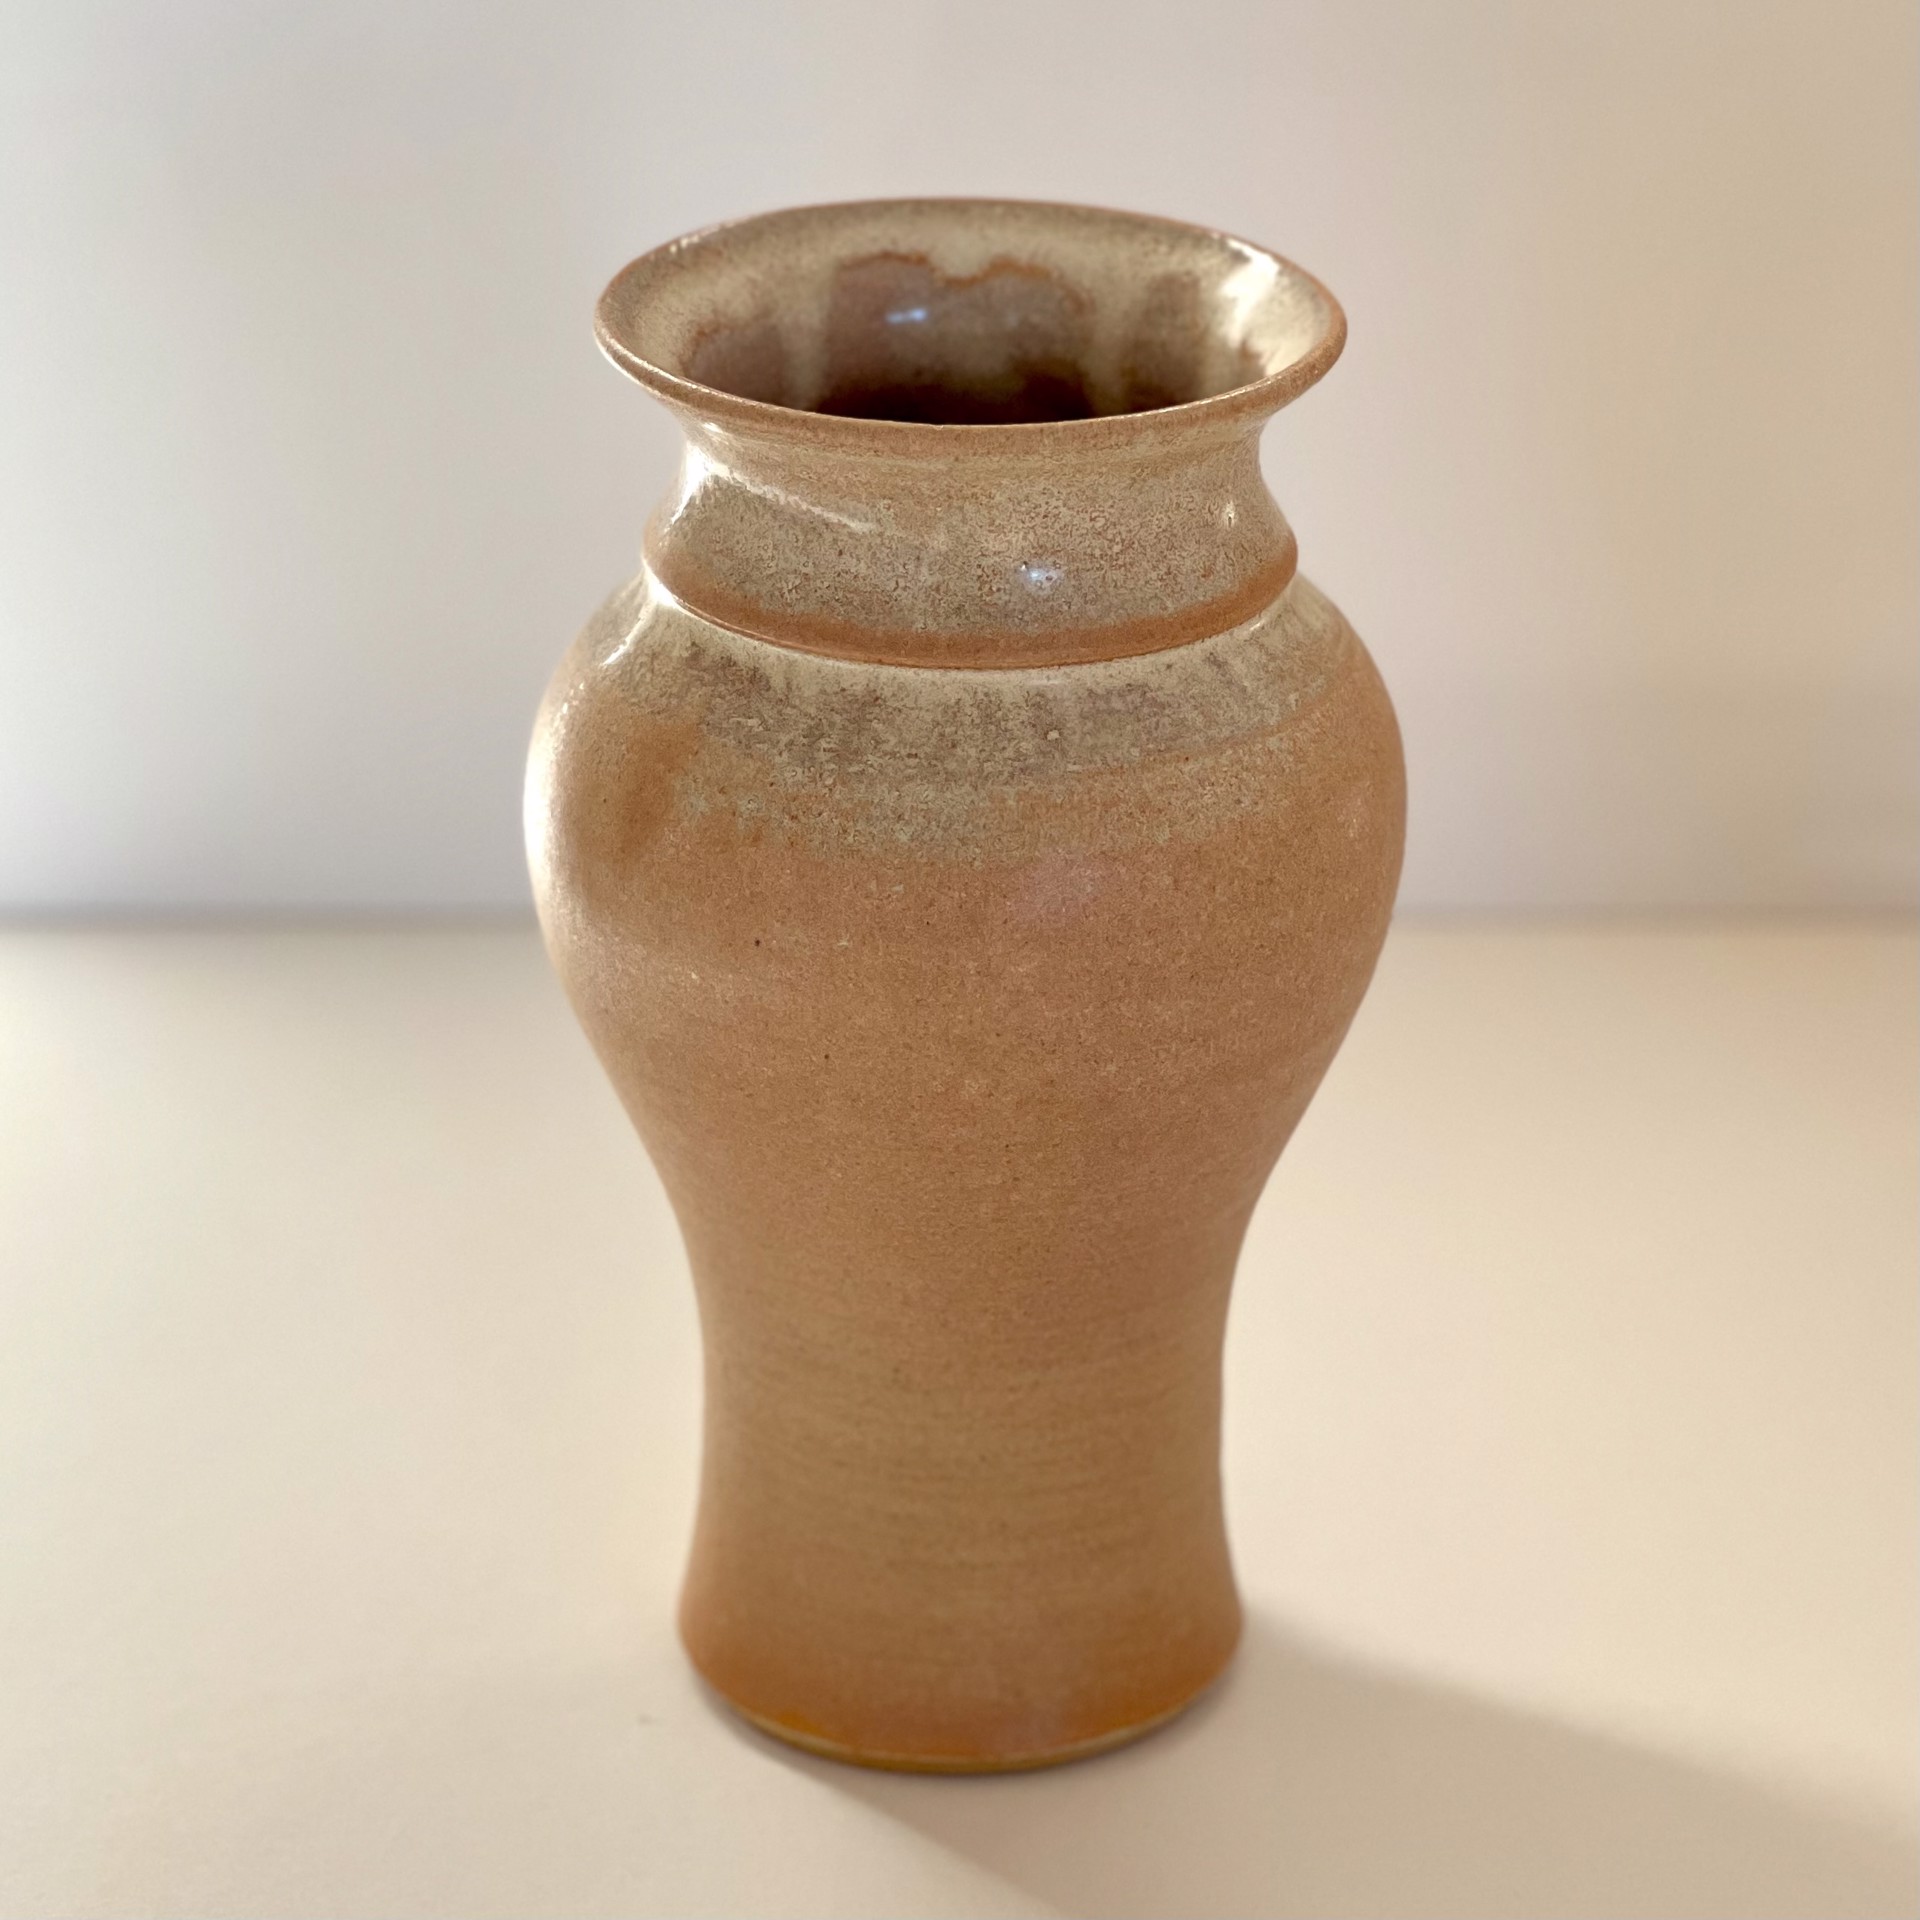 Vase 8 by David LaLomia